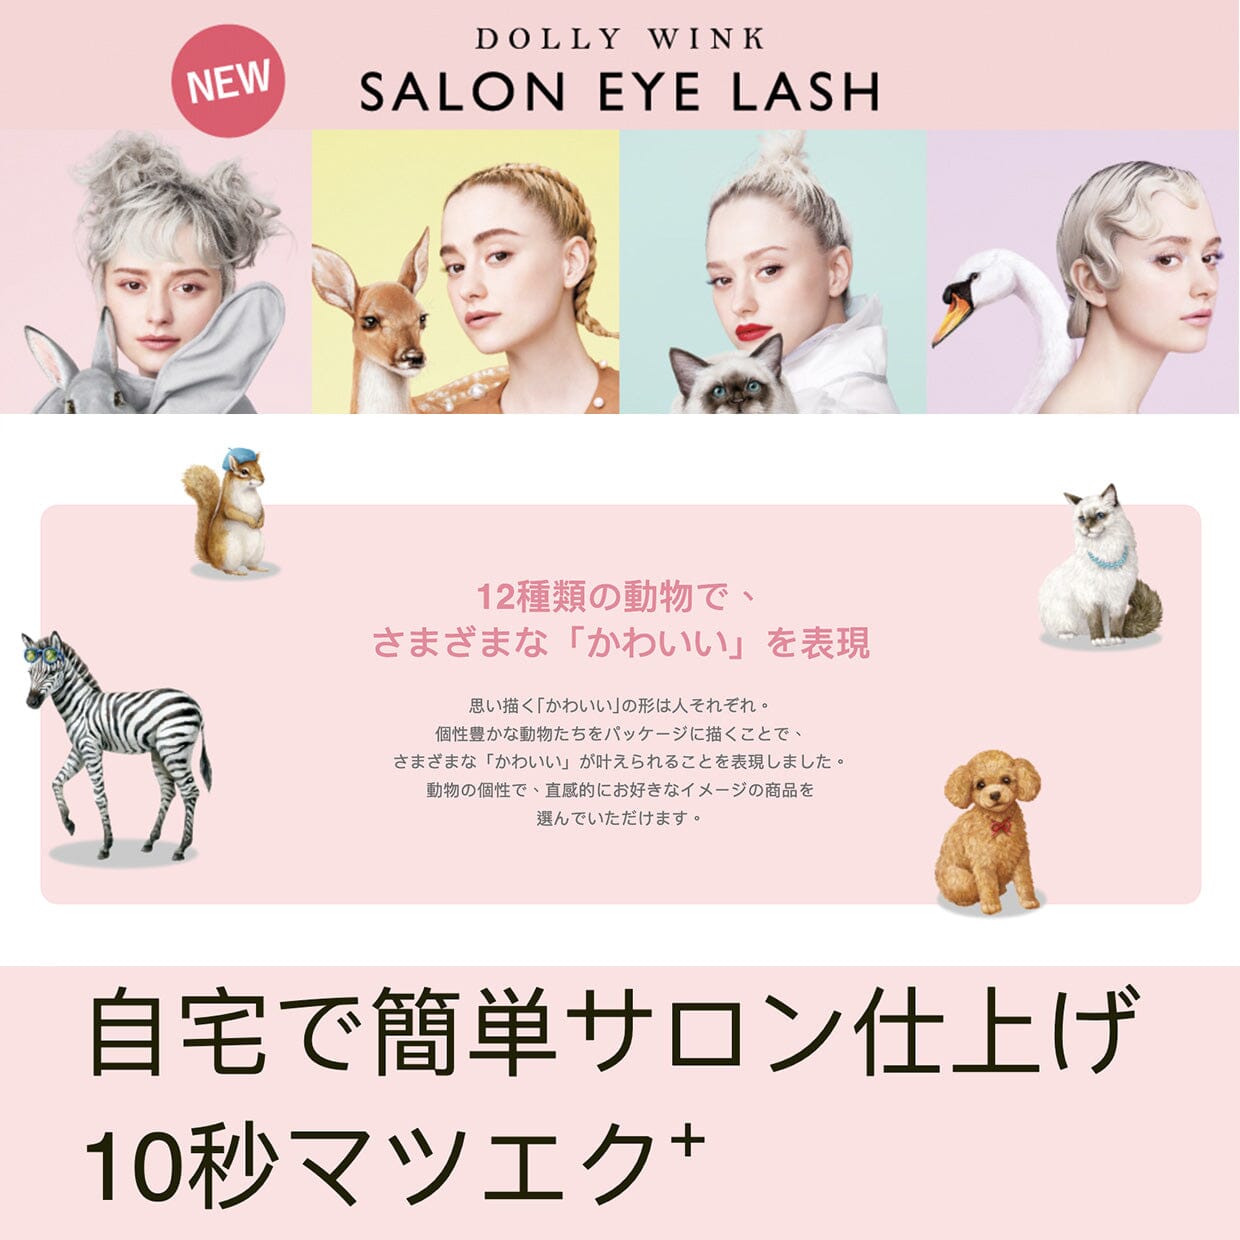 Koji Dolly Wink Salon Eye Lash No.1 Bunny-like Classy Curl